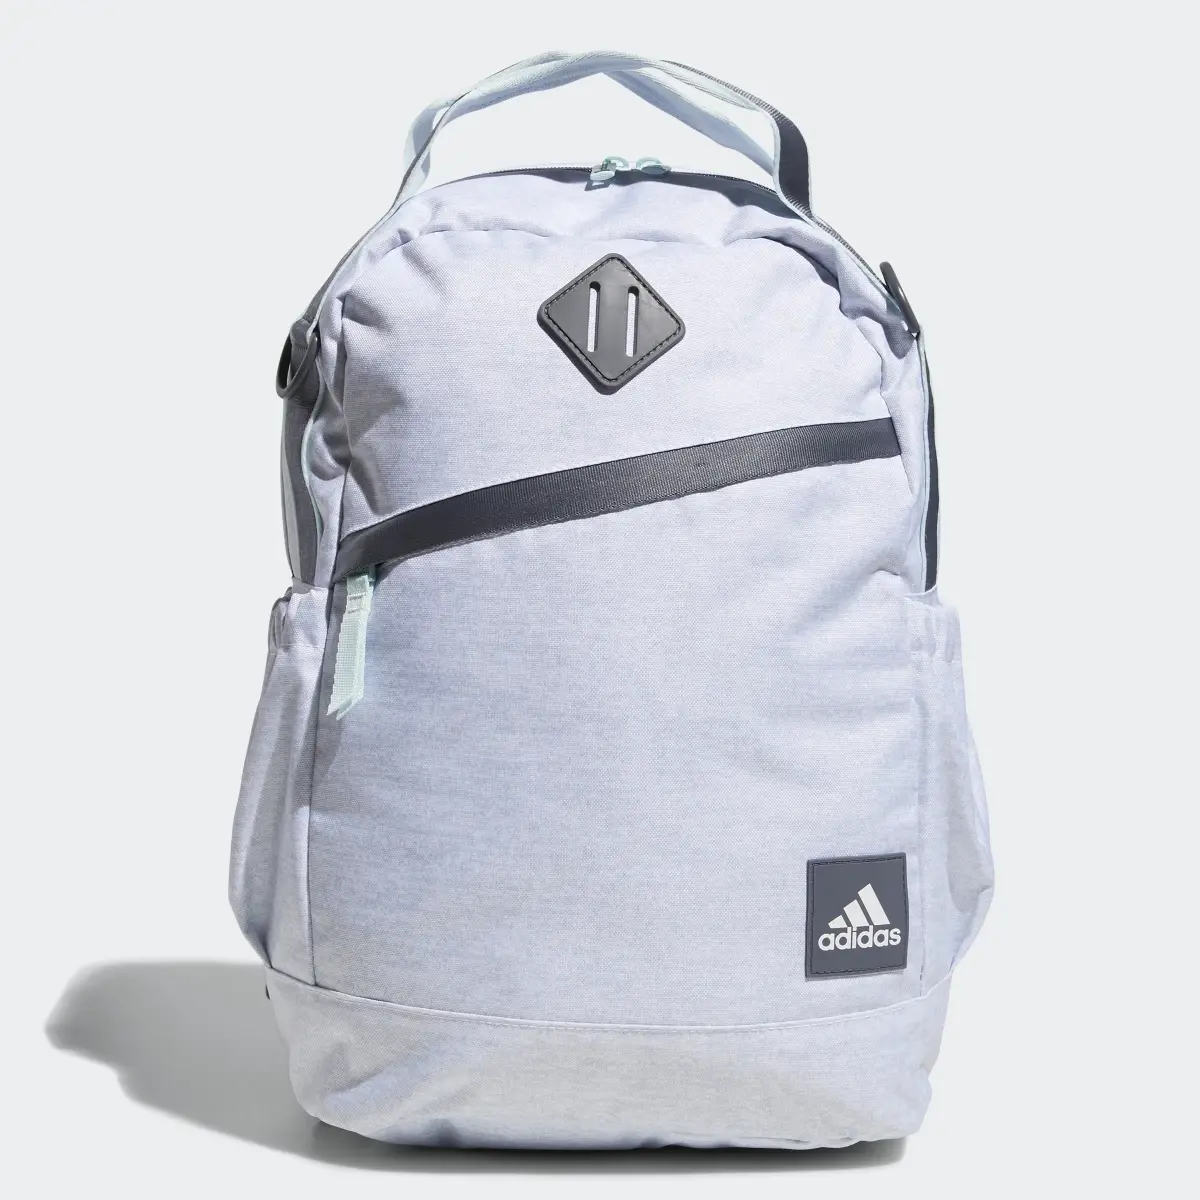 Adidas Squad Backpack. 2